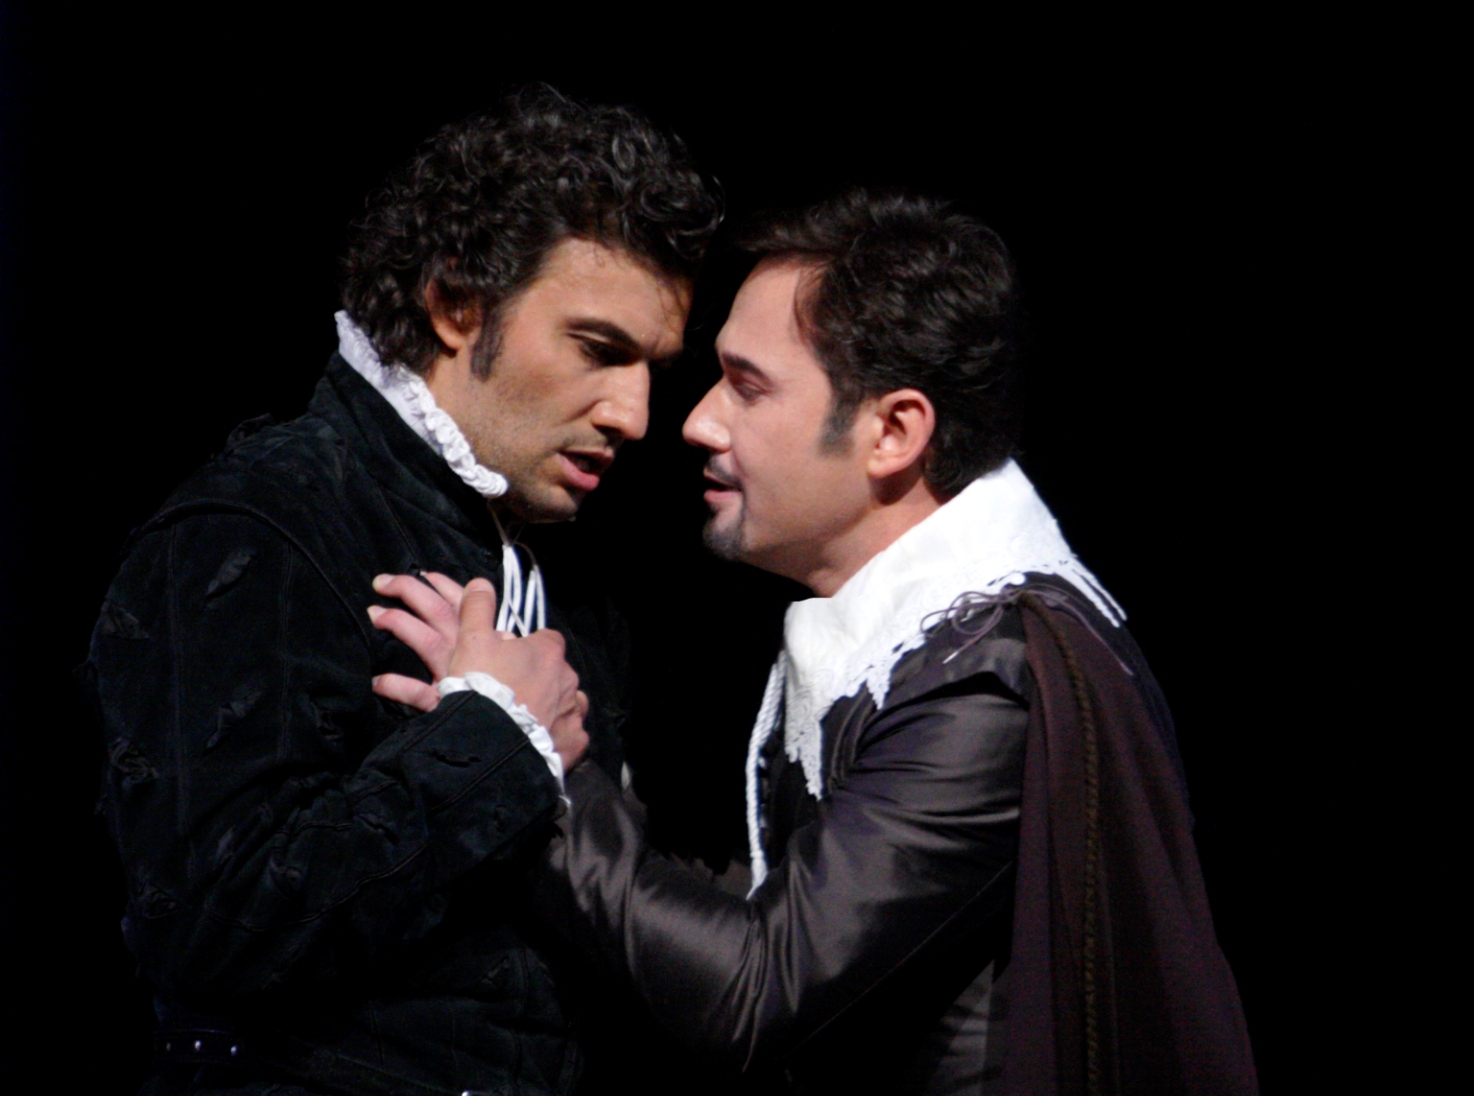 Jonas Kaufmann as Carlo and Marius Kwiecien as Rodrigo in the Royal Opera Don Carlo, photo by Catherine Ashmore